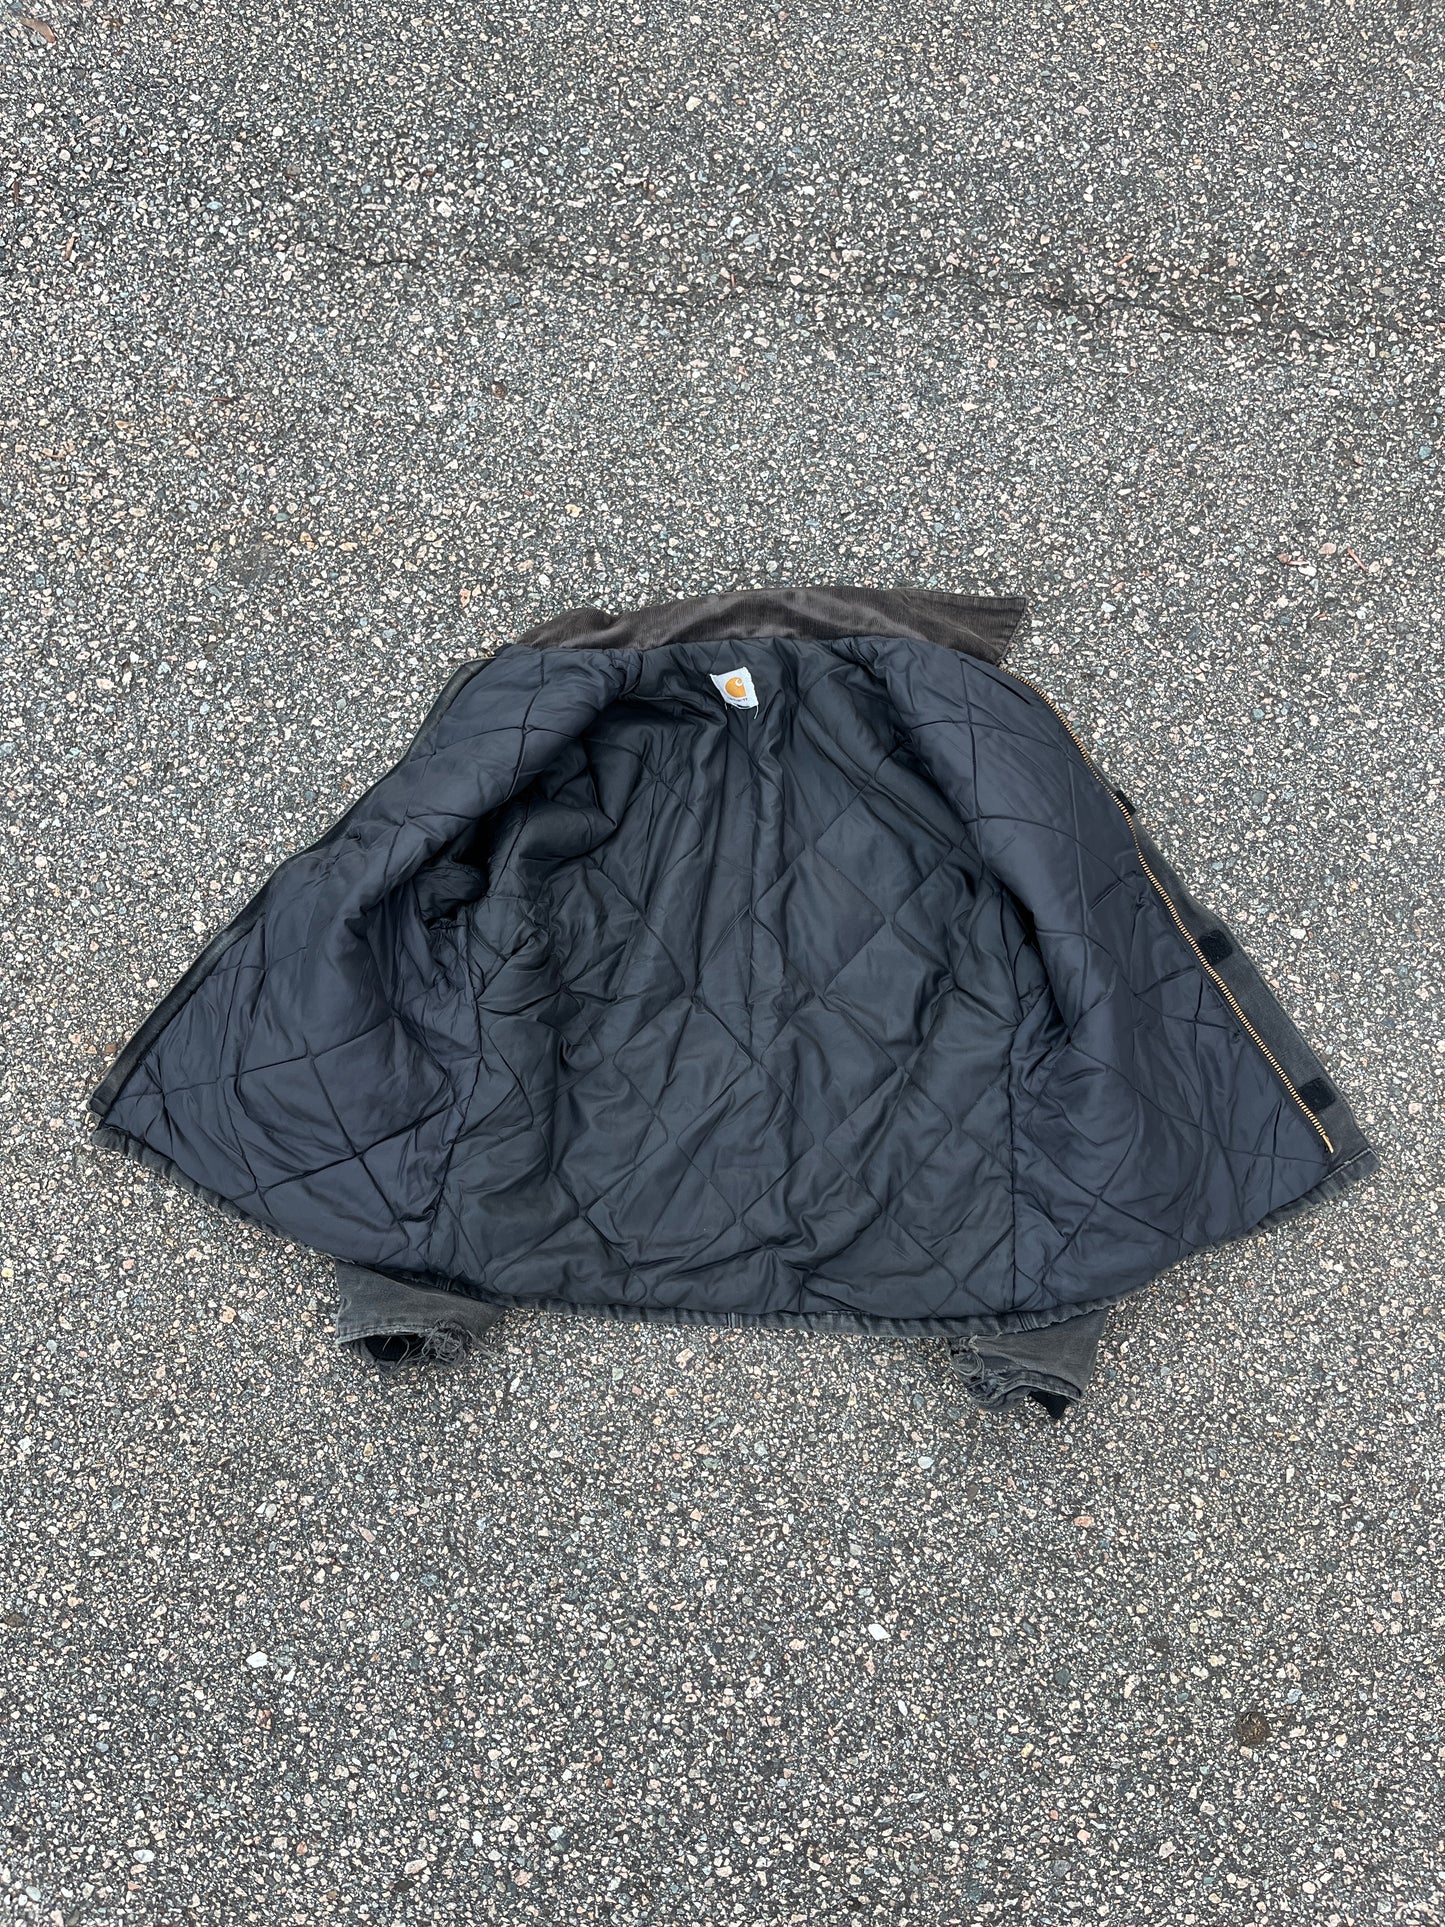 Faded Black Carhartt Arctic Jacket - Boxy Large